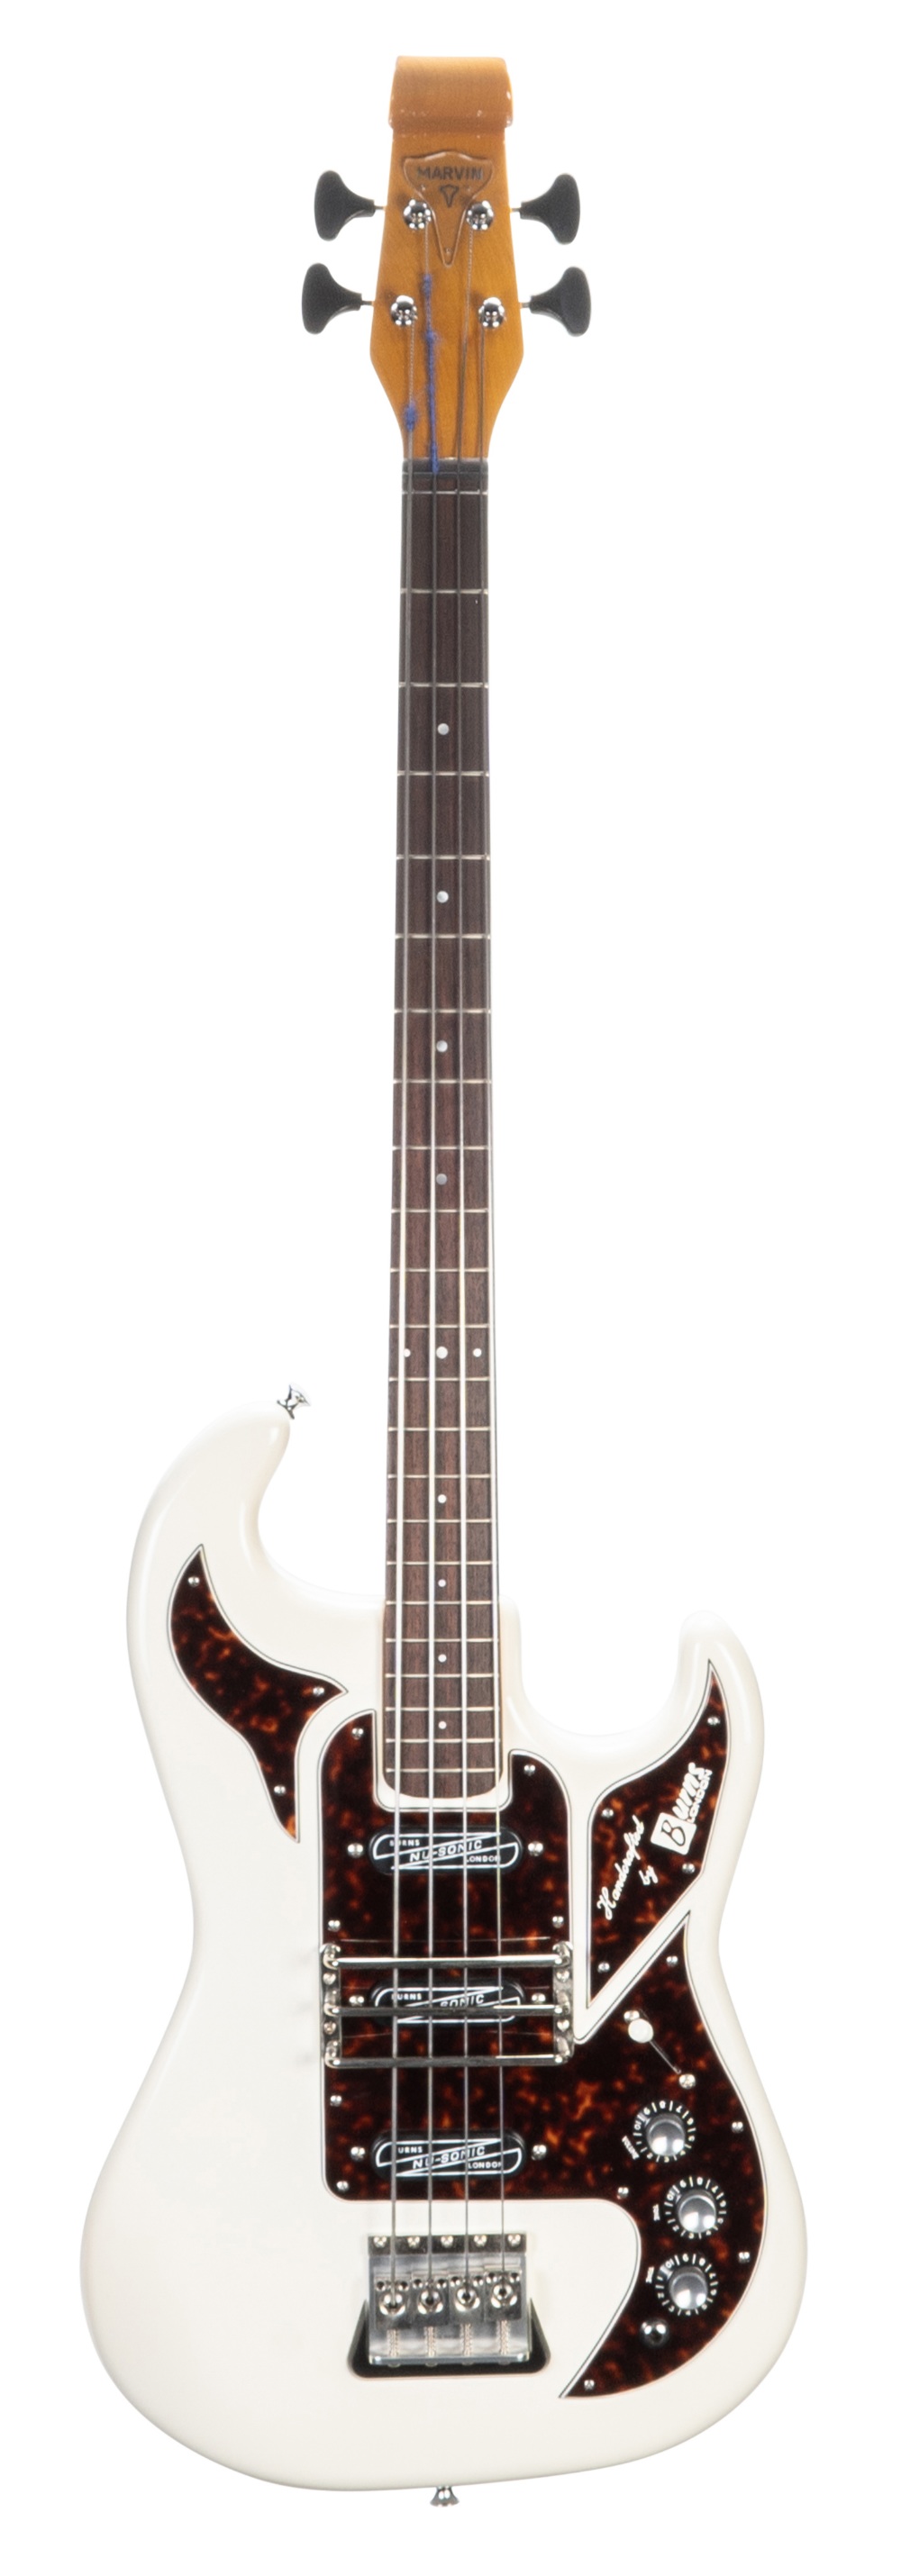 Burns Marvin John Rostill 1964 Shadows bass guitar, made in China, ser. no. 0xx2; Finish: white;